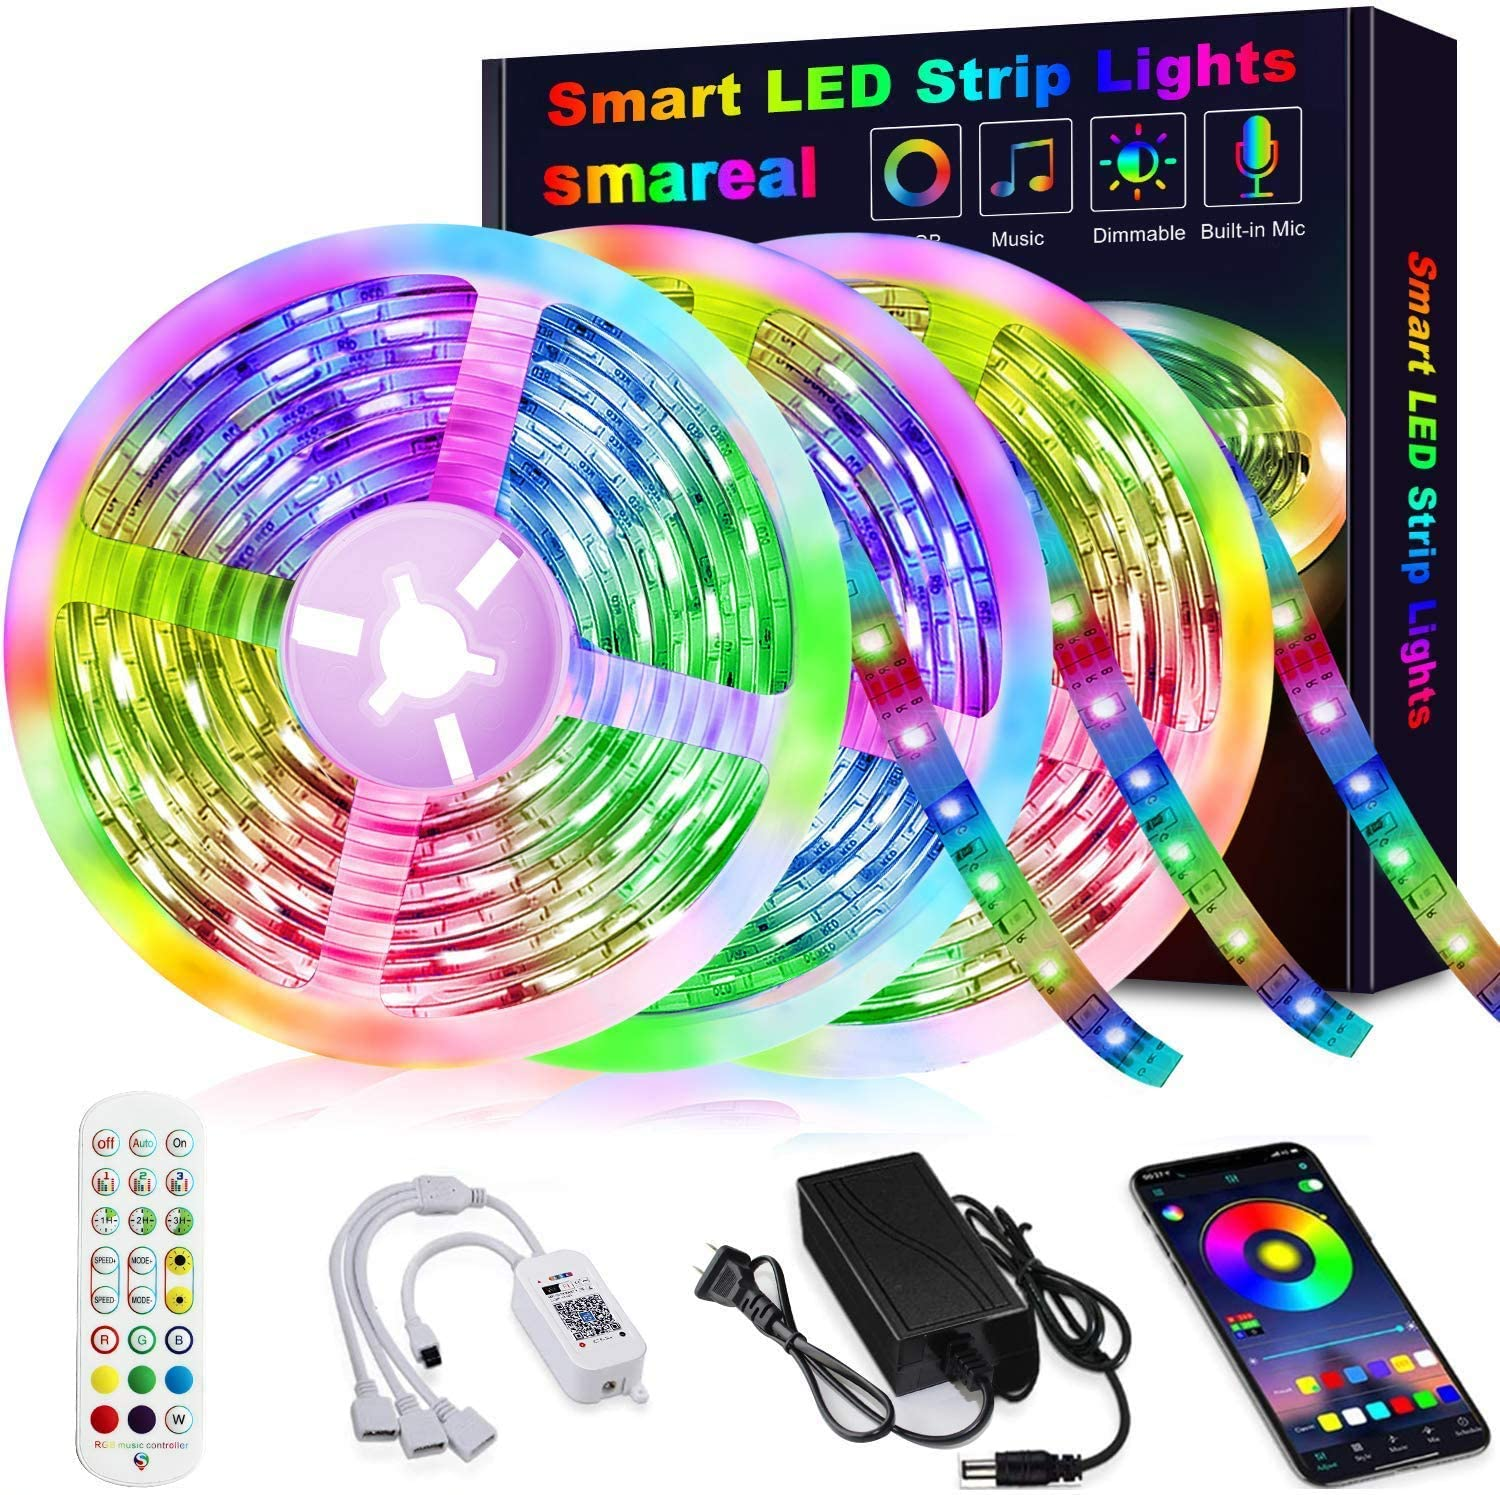 50 Feet Led Strip Lights , Smart Led Lights for Bedroom Music Sync Rope Lights Flexible DIY Led Light $17.99 $17.99